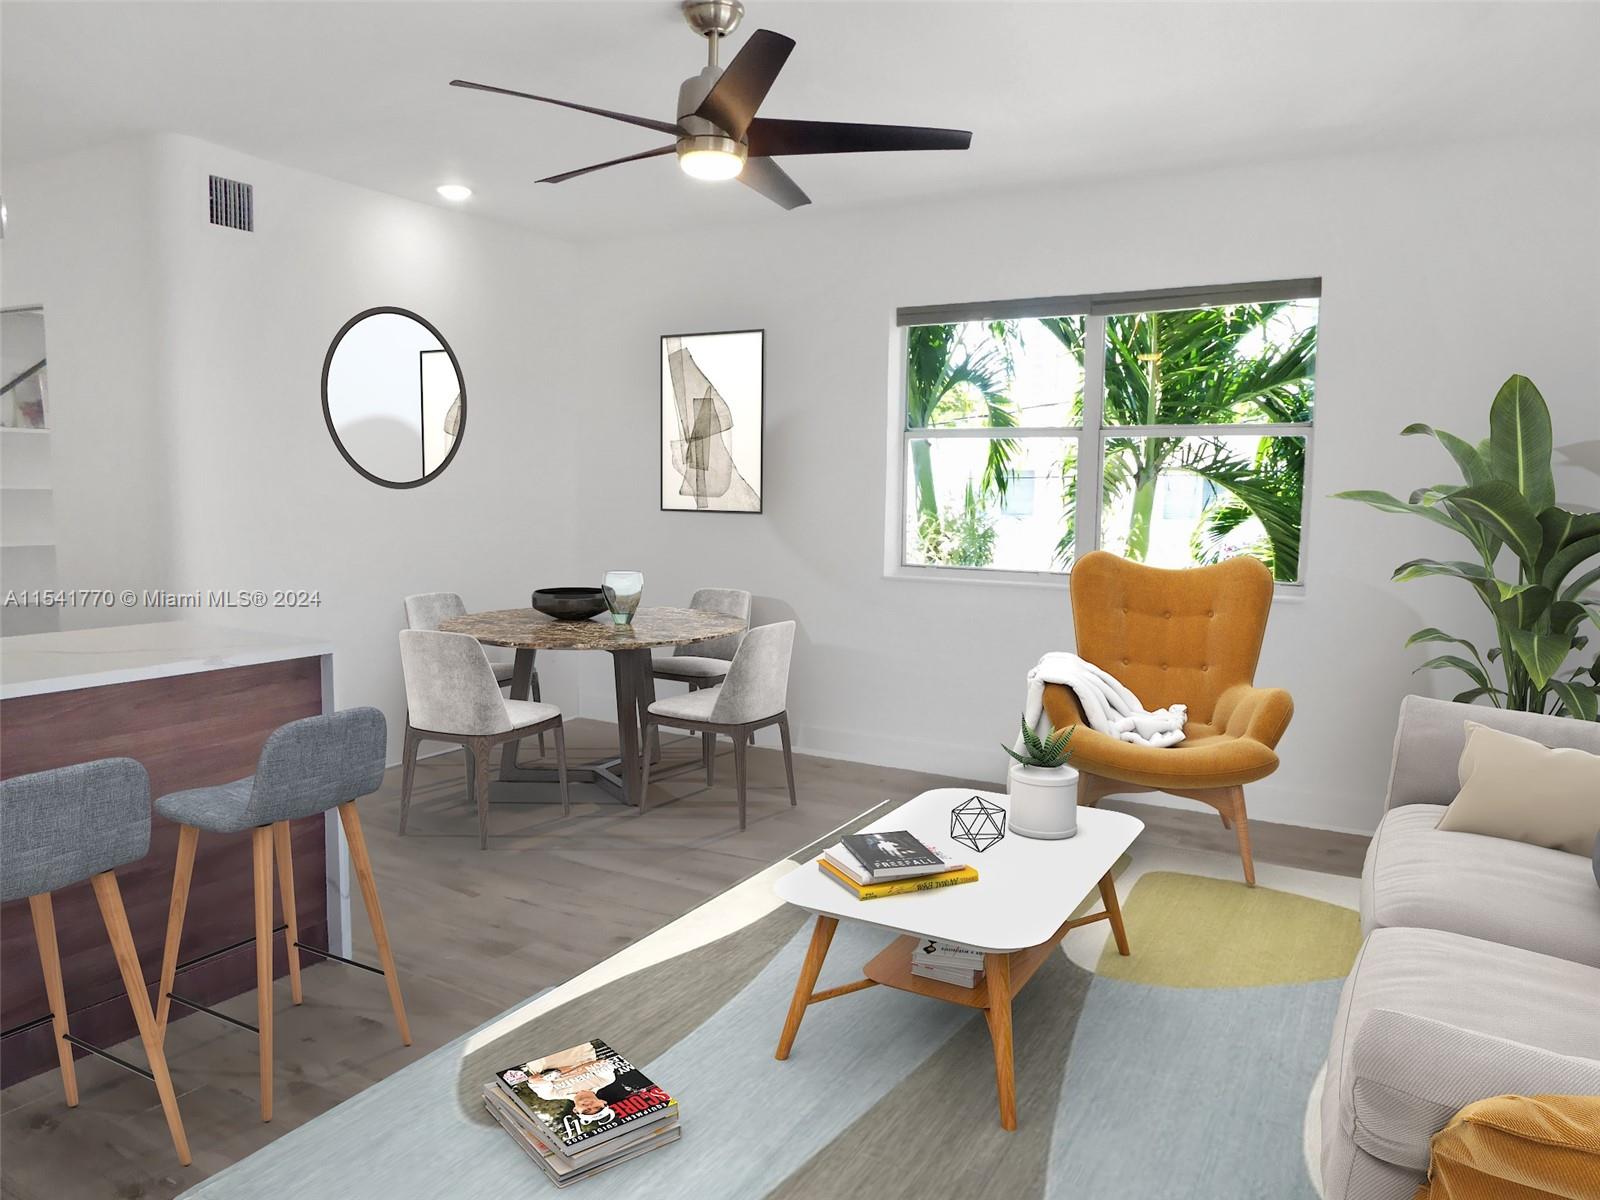 Rental Property at 1000 7th St St 8, Miami Beach, Miami-Dade County, Florida - Bedrooms: 2 
Bathrooms: 1  - $2,995 MO.